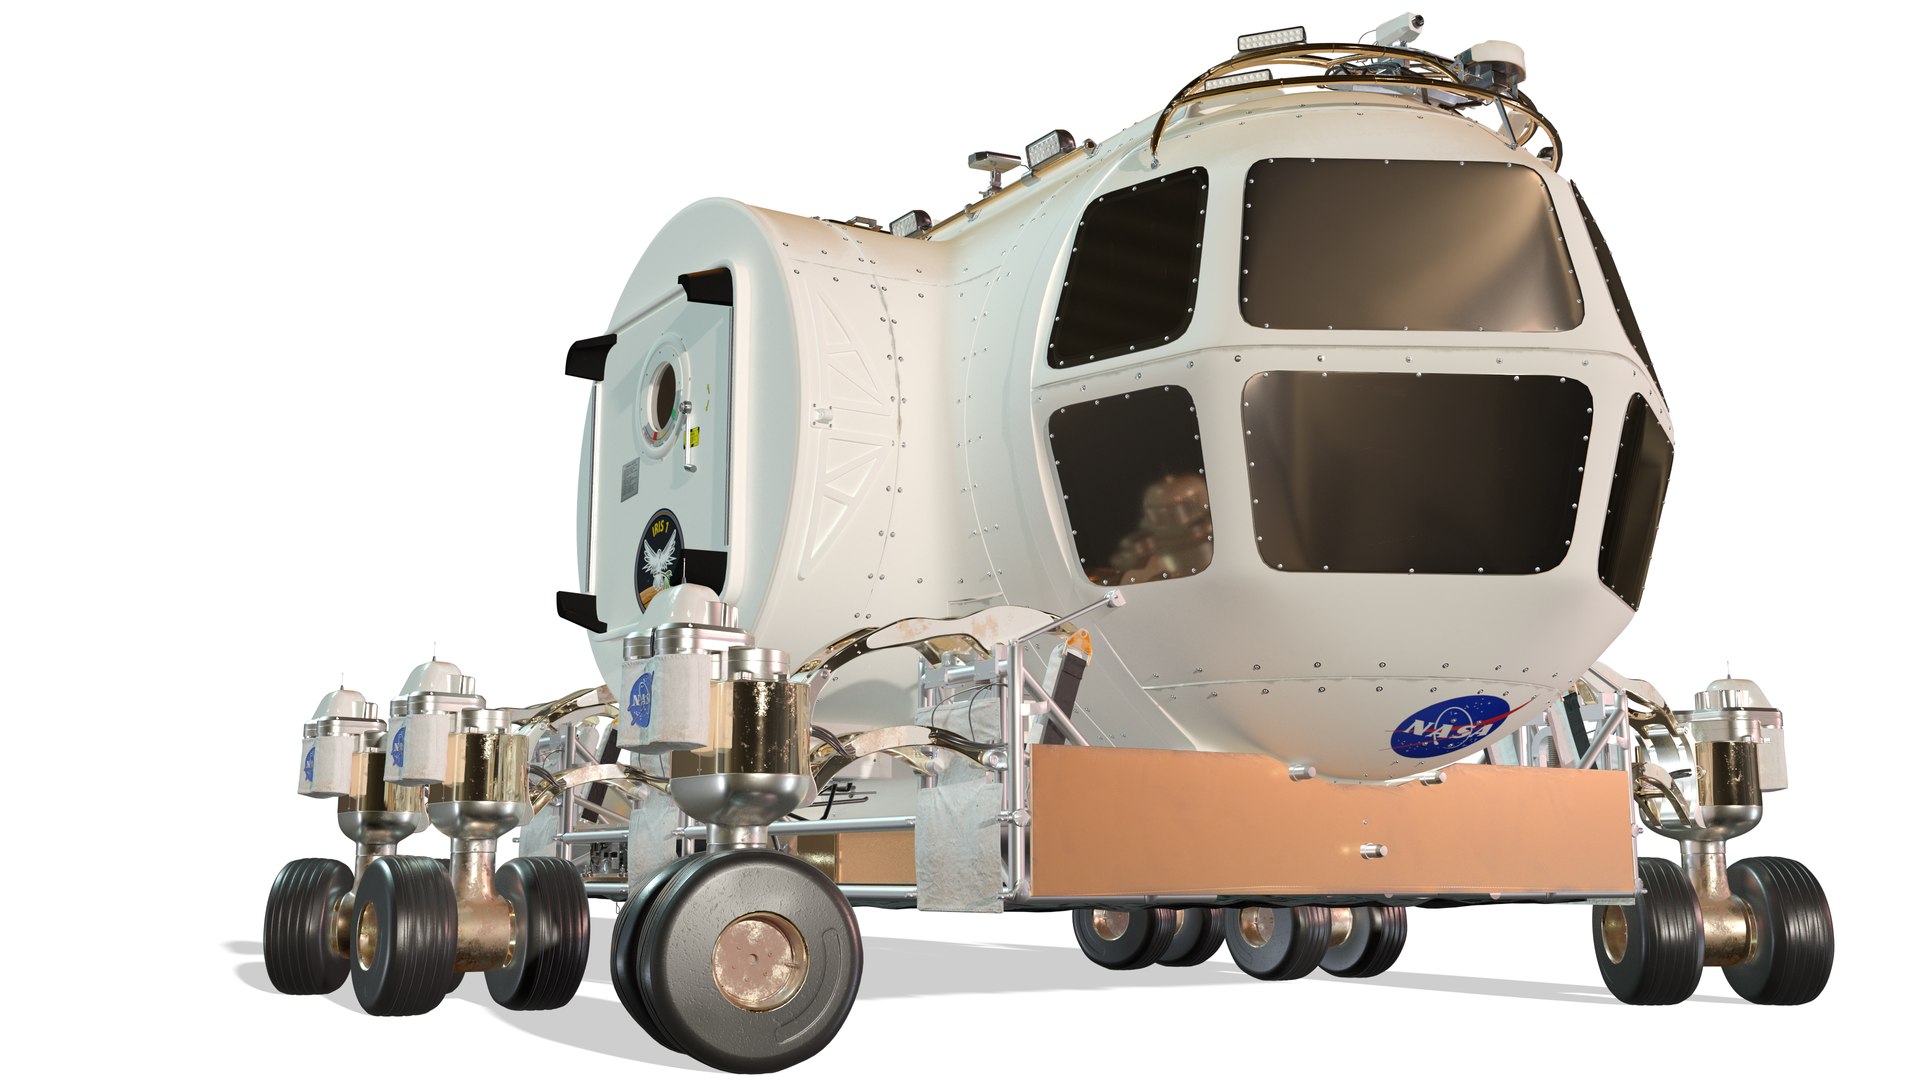 modular space exploration vehicle